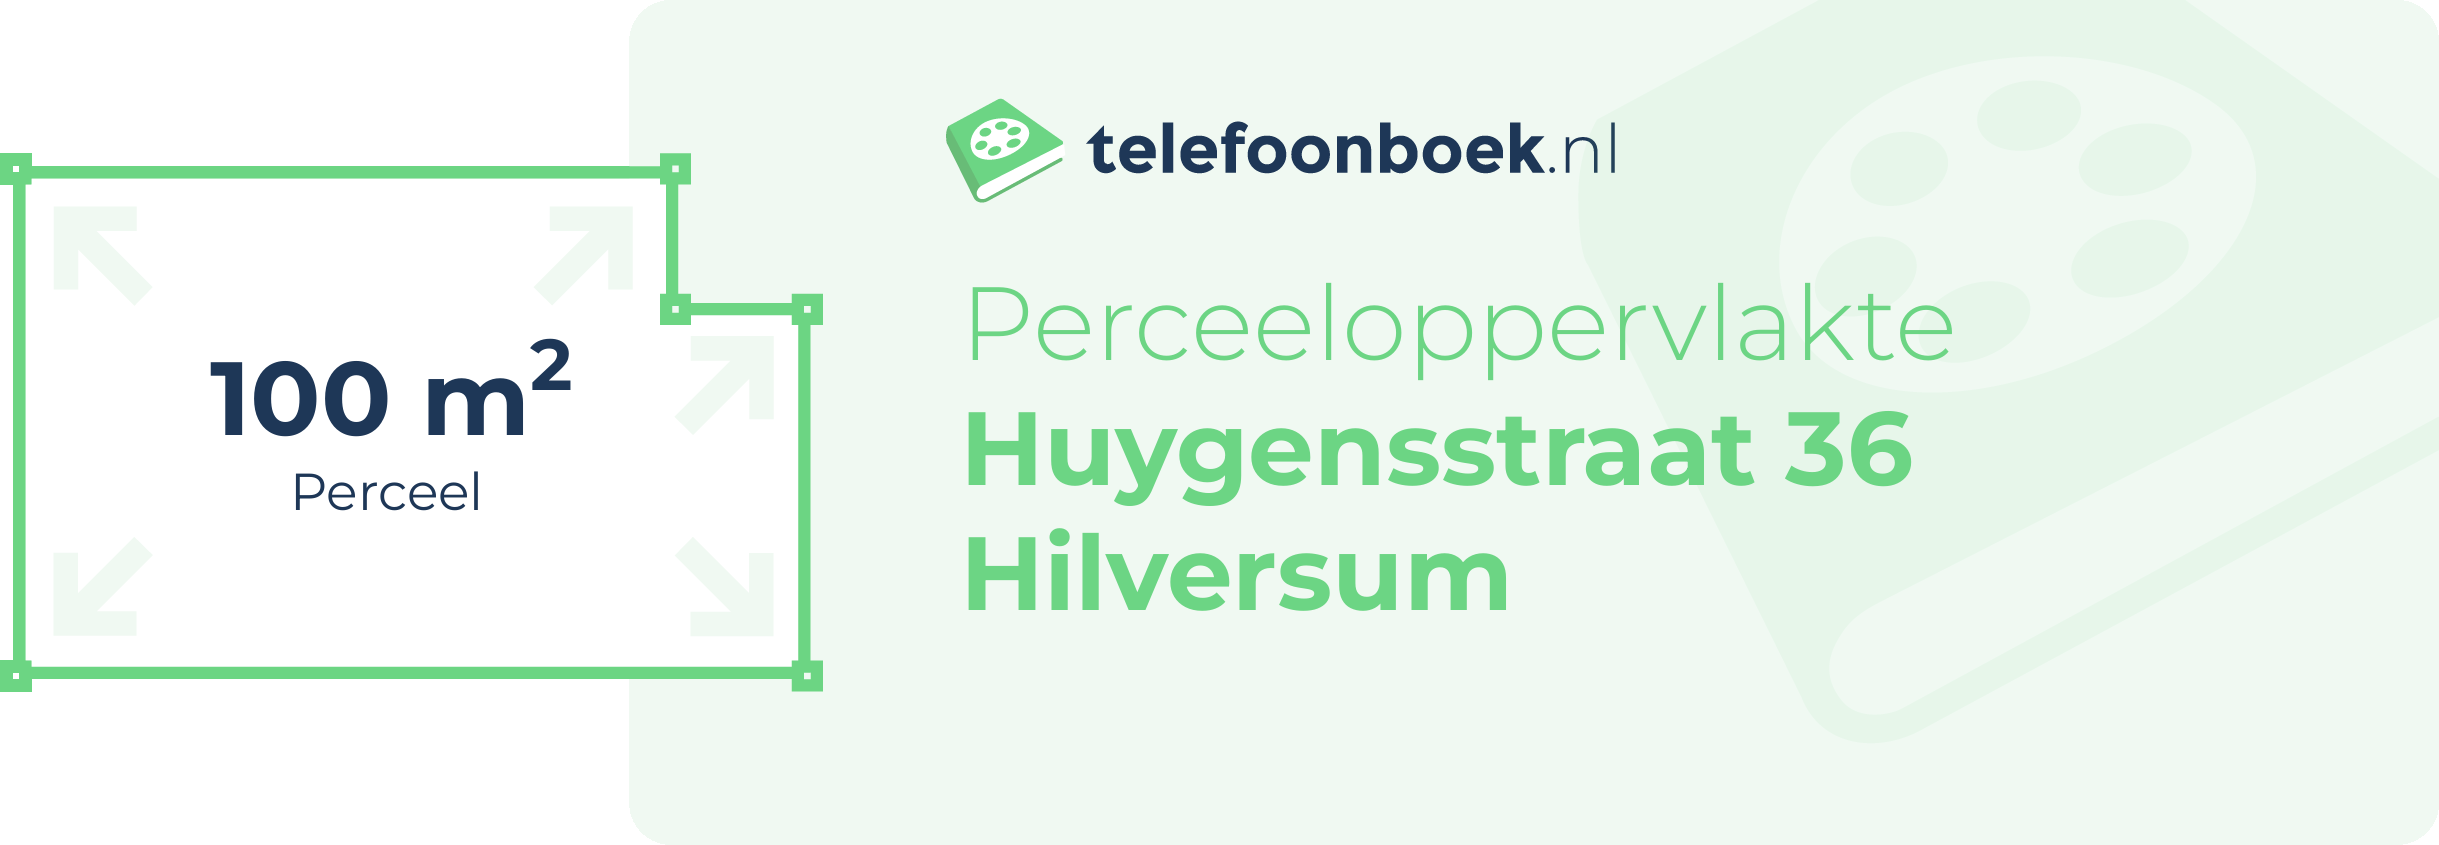 Perceeloppervlakte Huygensstraat 36 Hilversum